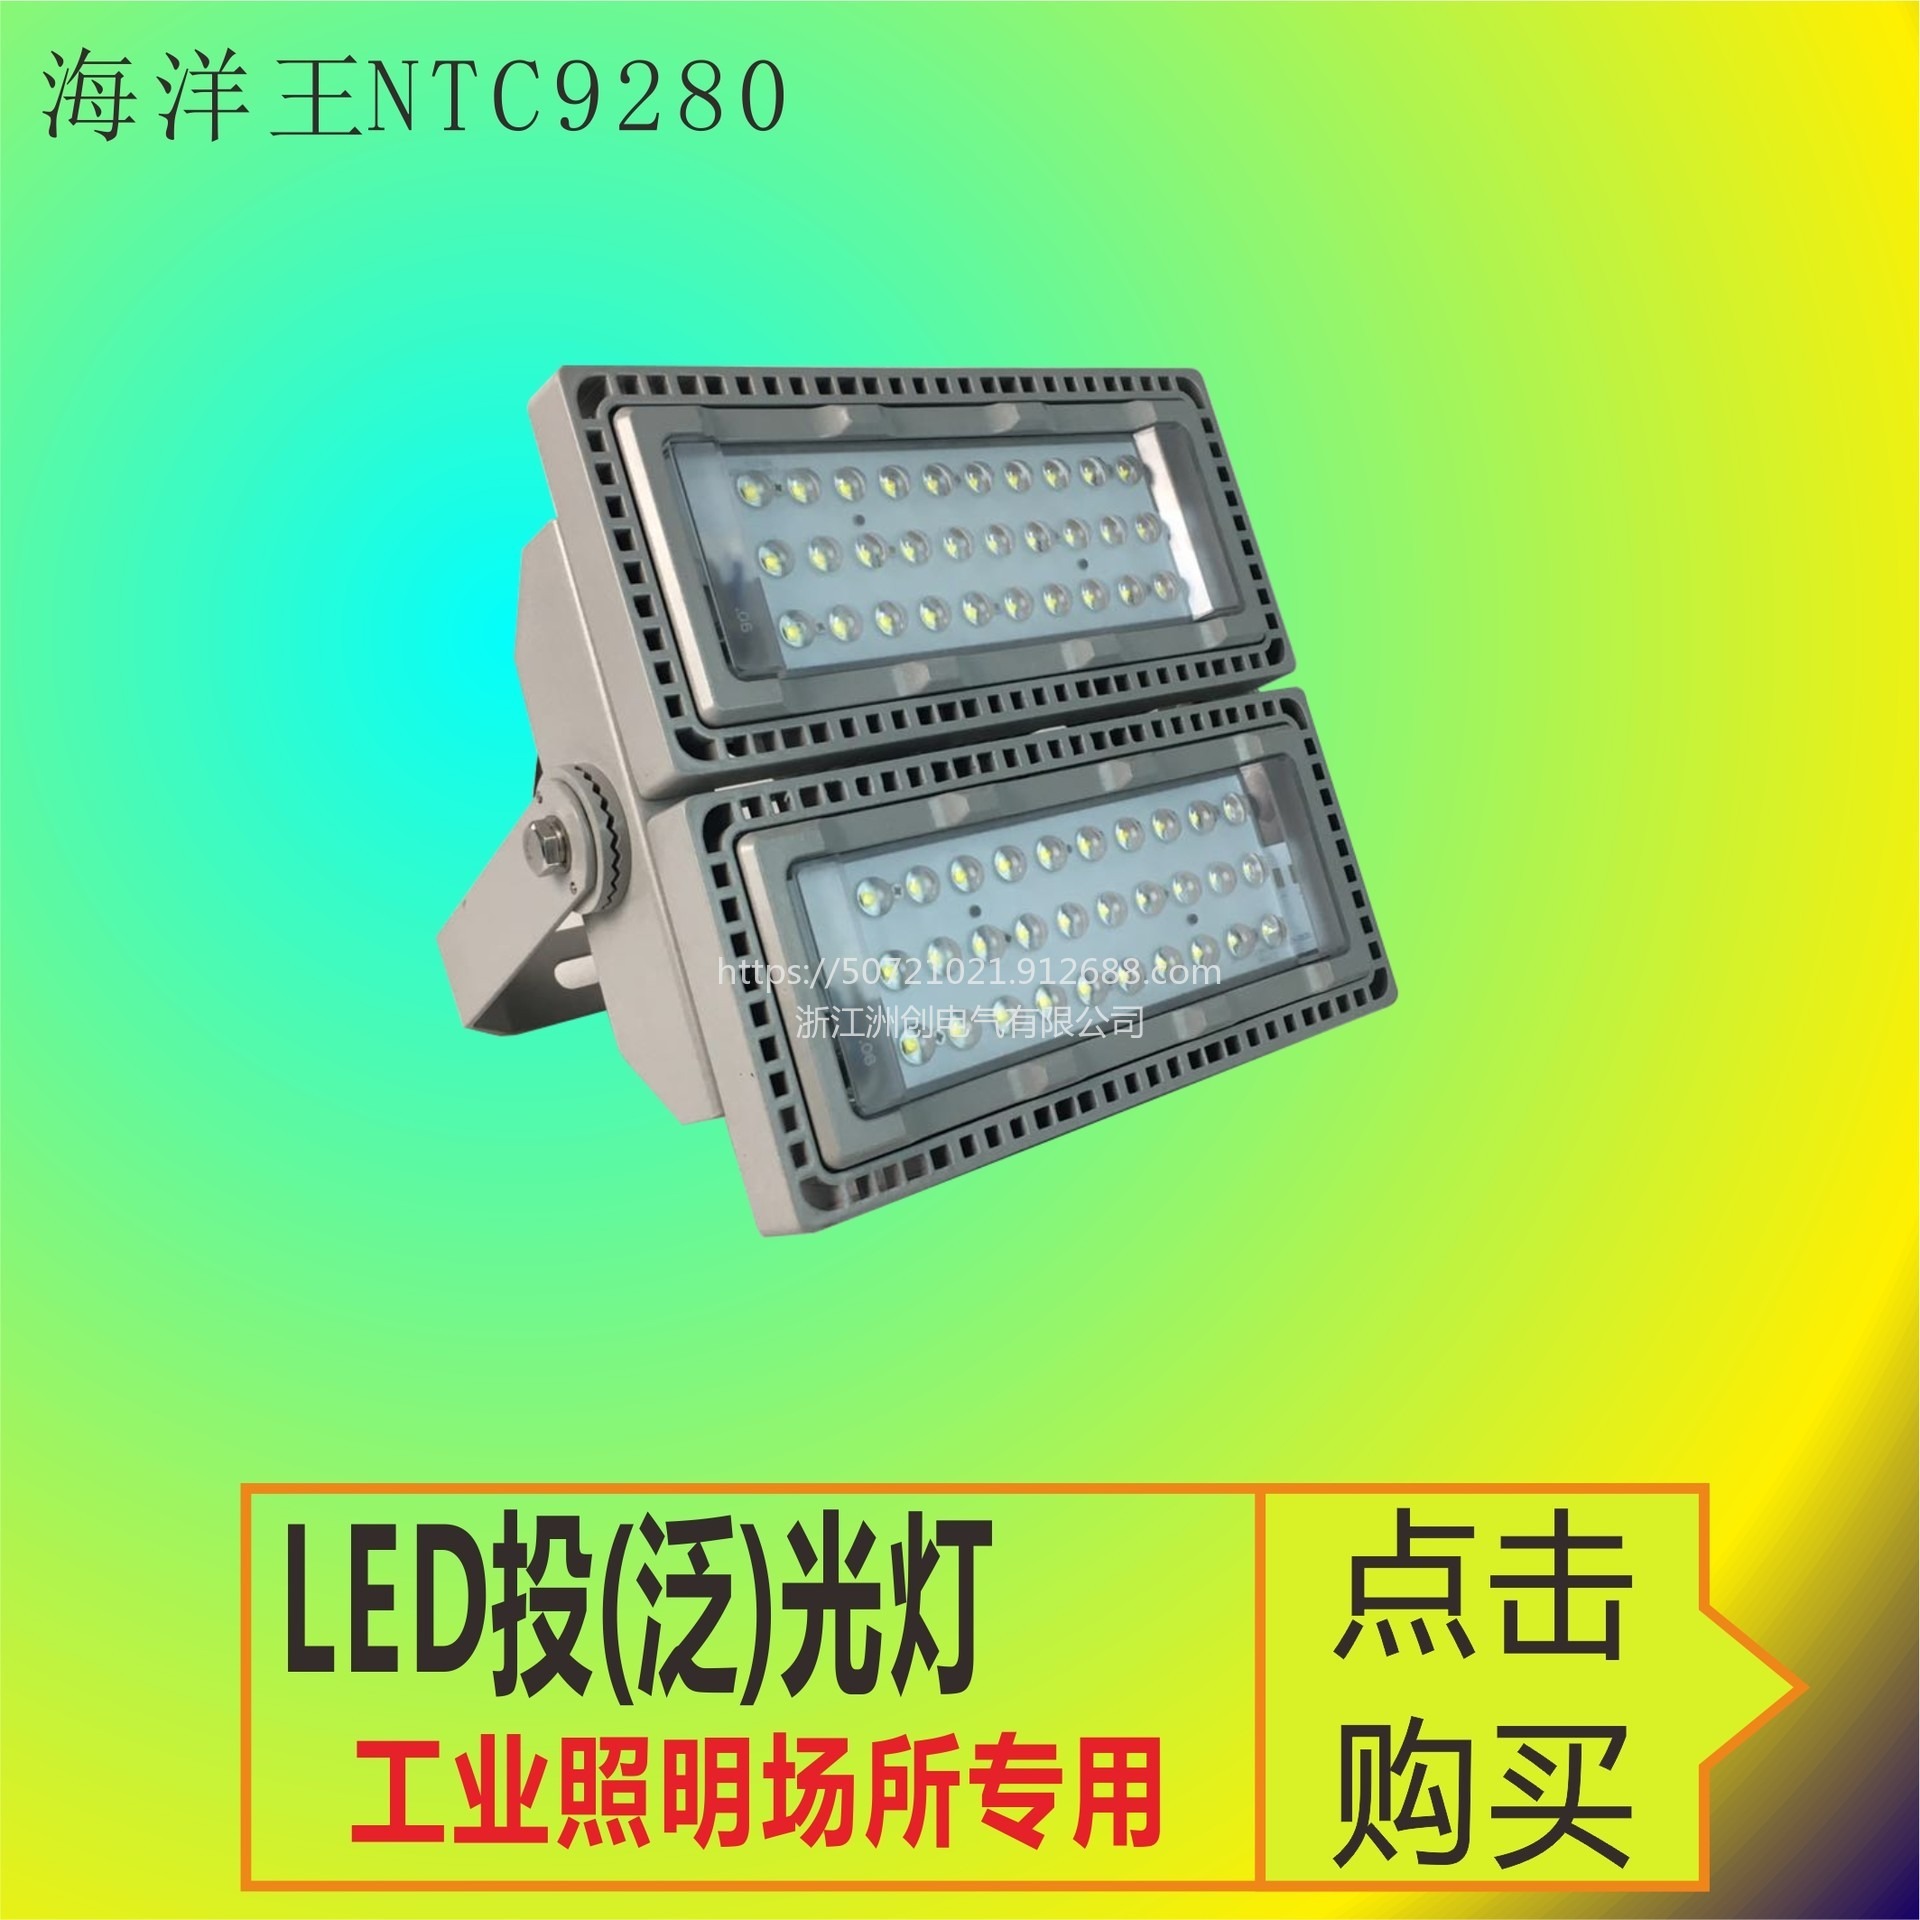 NTC9280-200W铸铝LED投光灯 NTC9280-200W冷白光三防灯  NTC9280系列LED投光灯